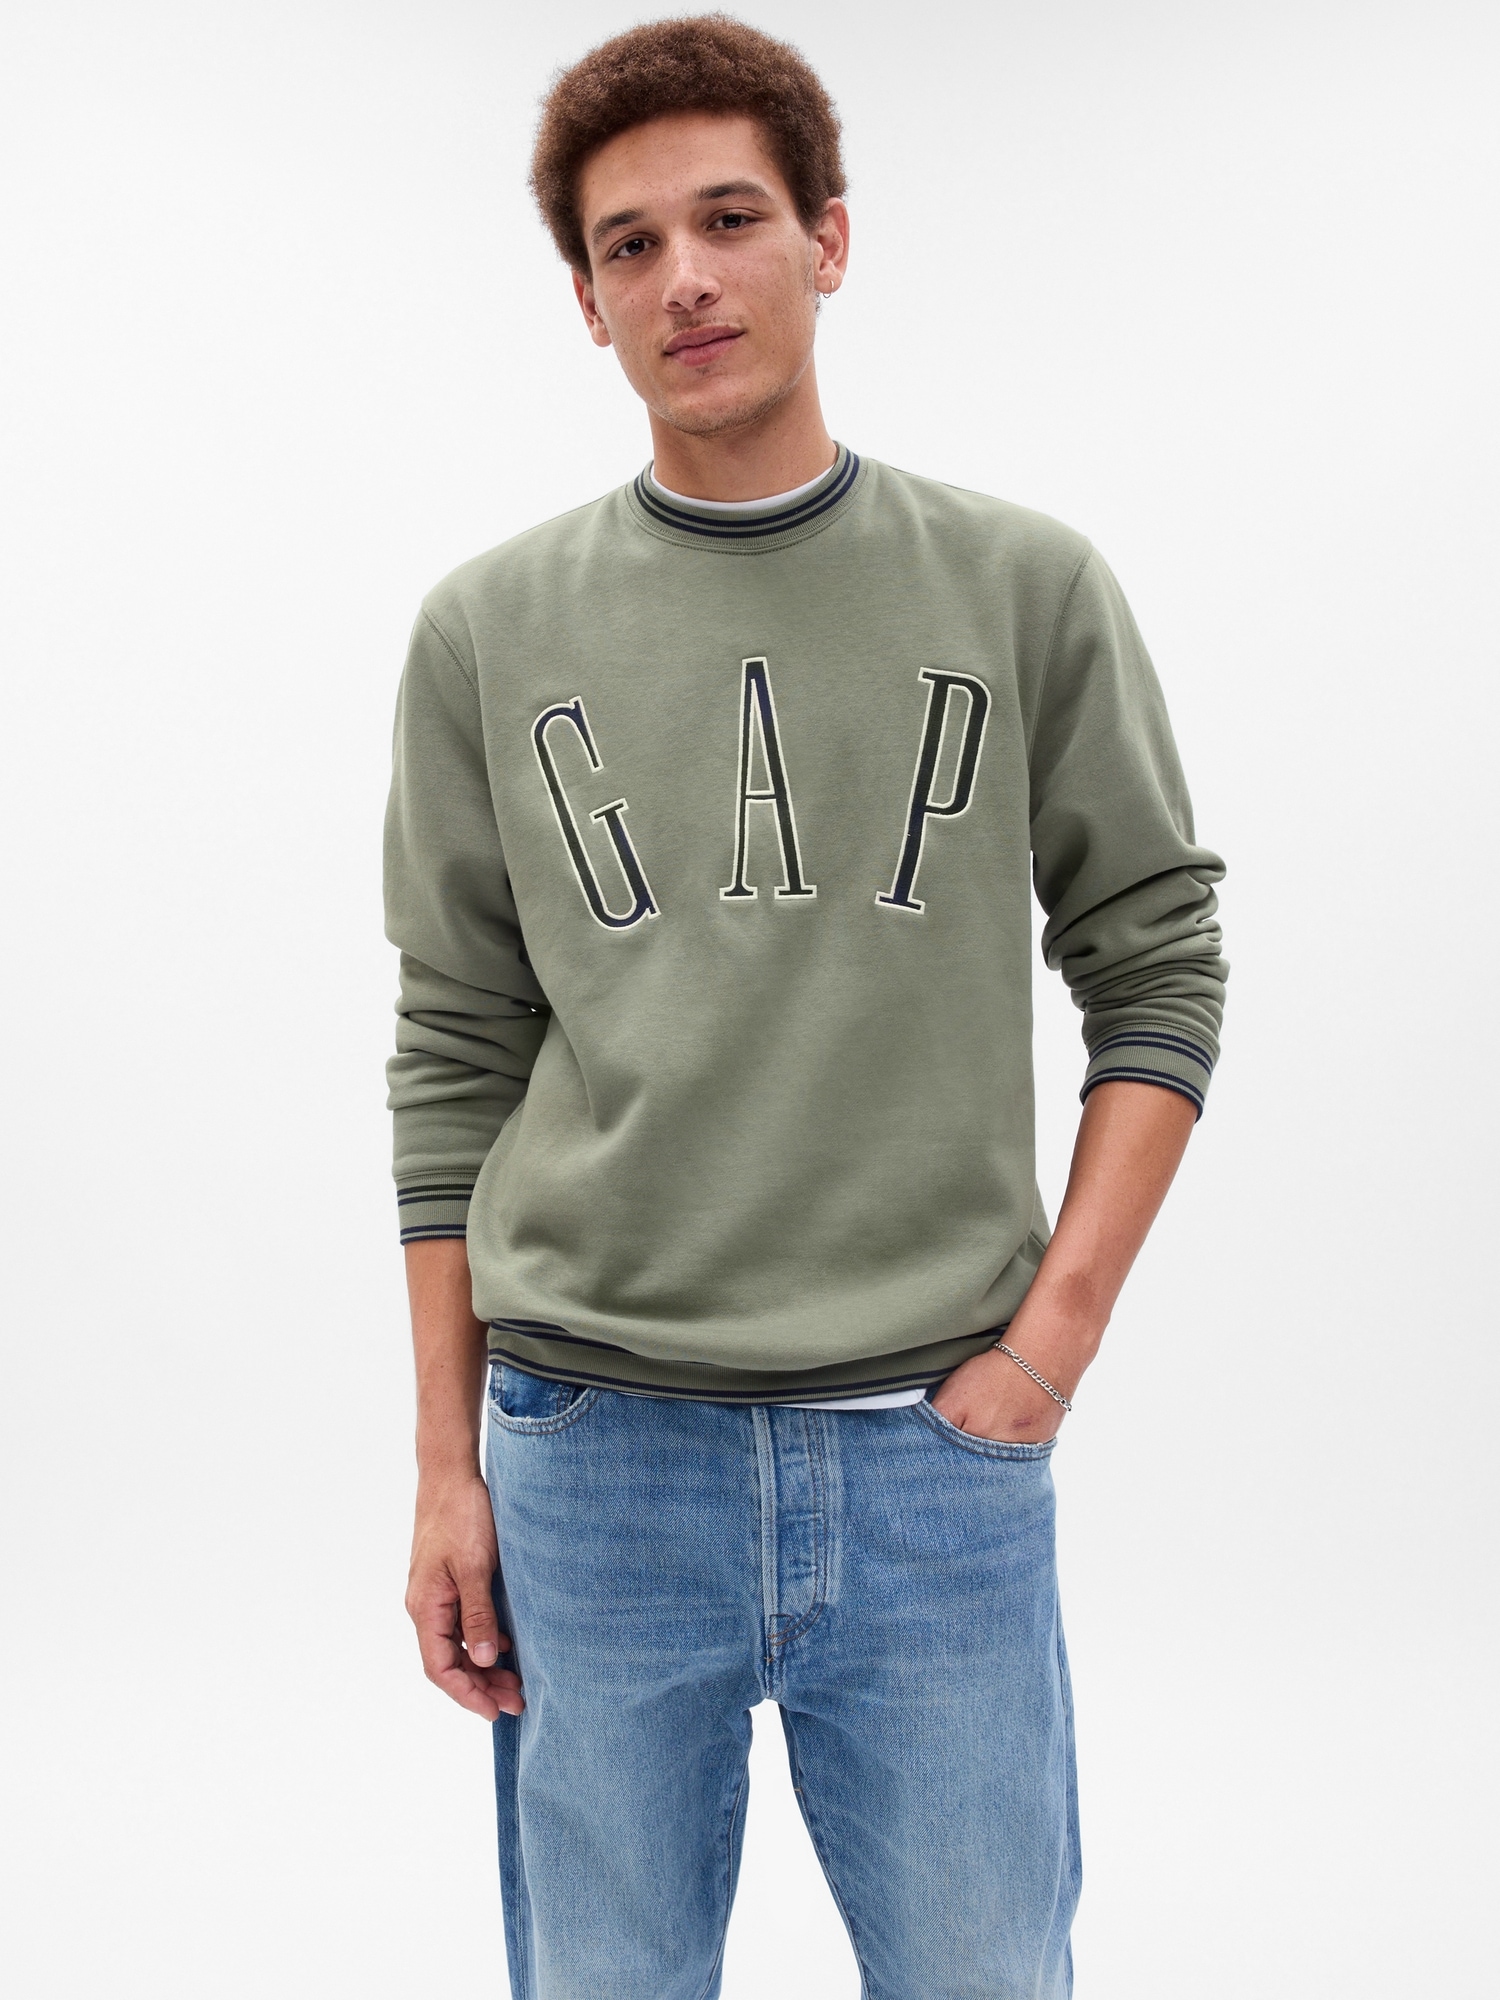 GAP Sweatshirt With Logo - Men